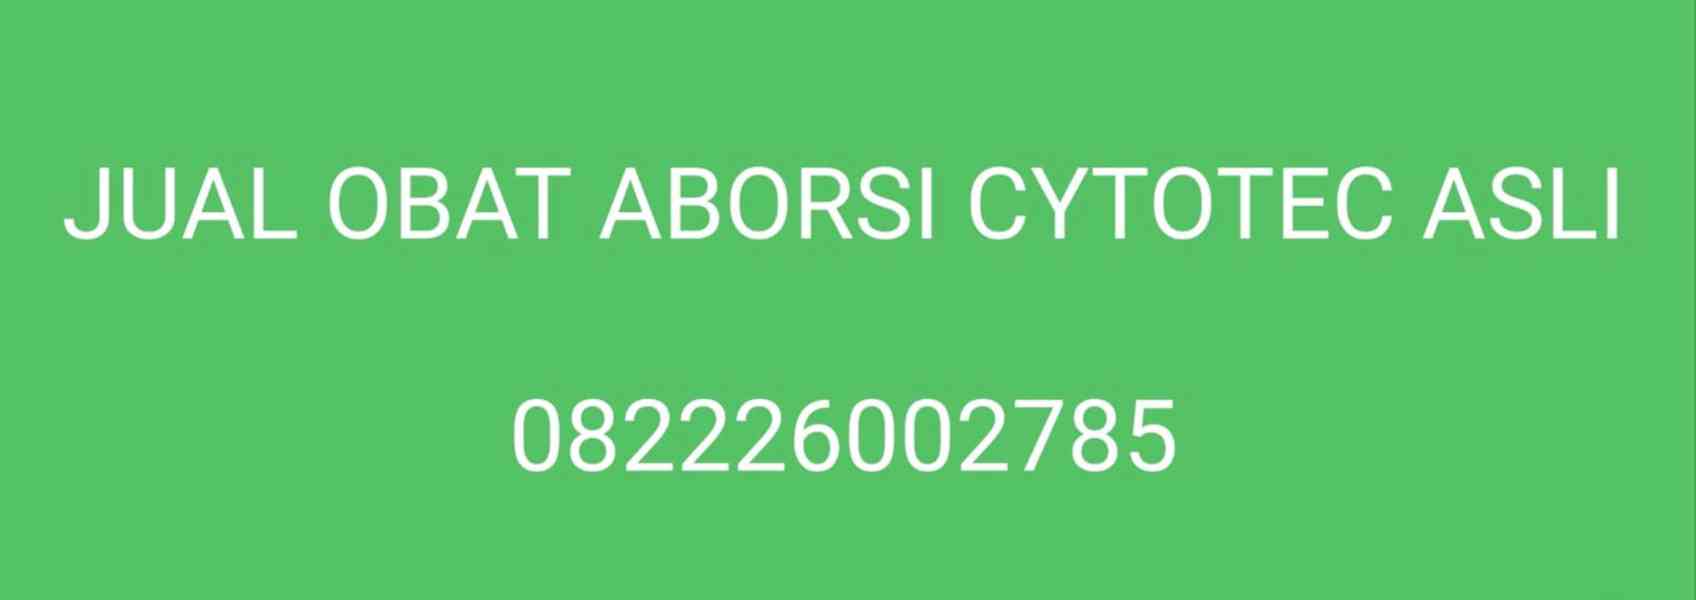 Toko Obat Aborsi Cod Malang 082226002785 Cytotec Asli Malang - foto 1